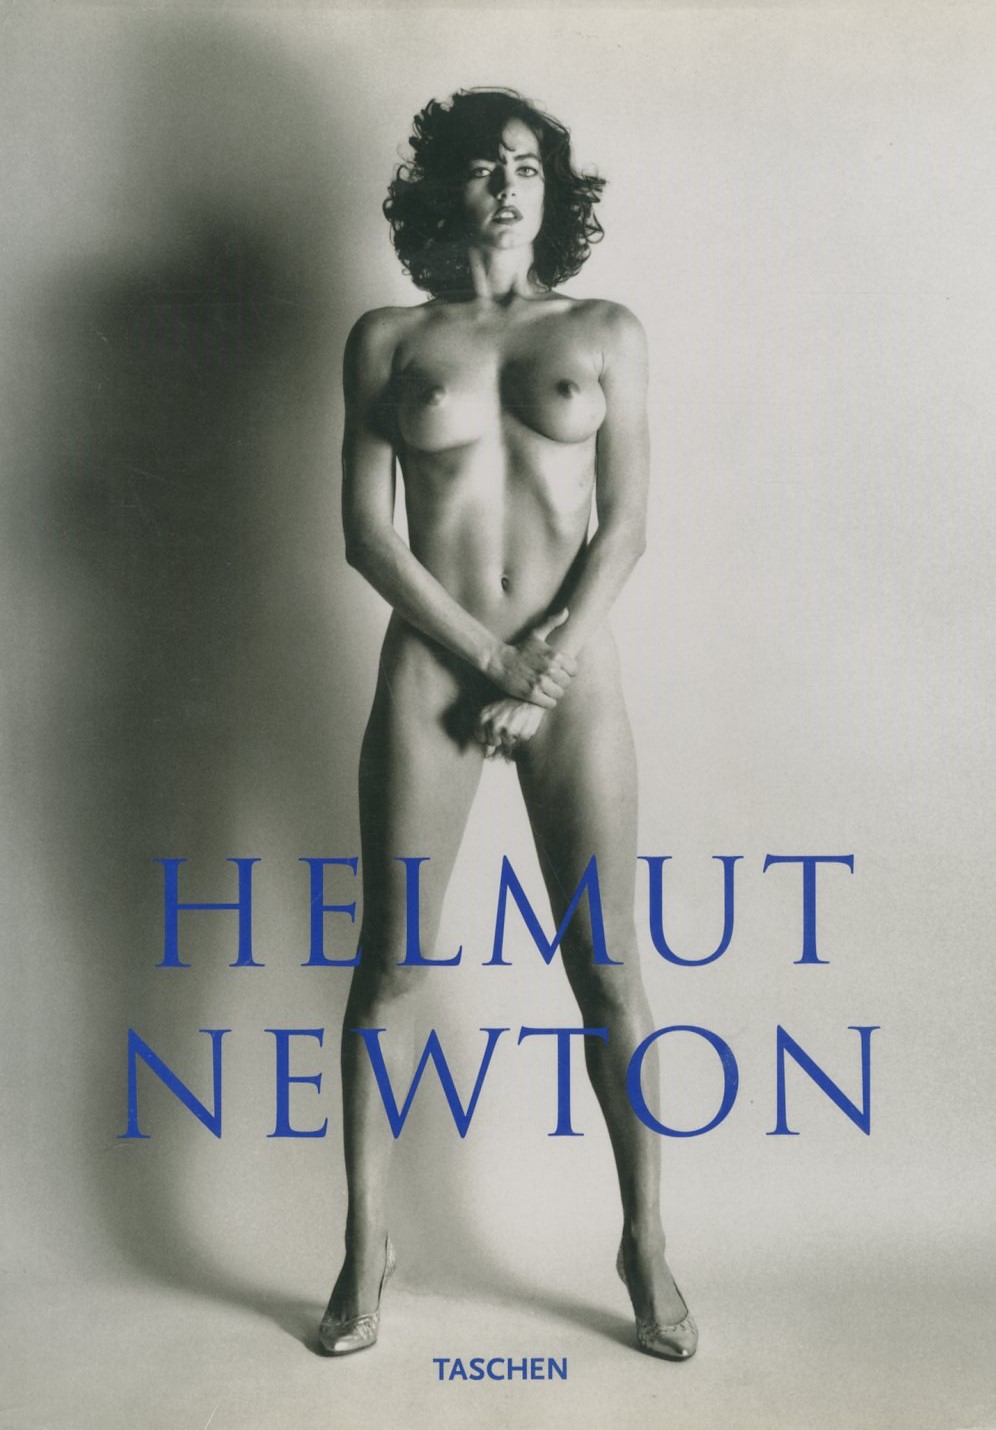 「Helmut Newton: SUMO New Edition / Helmut Newton」メイン画像